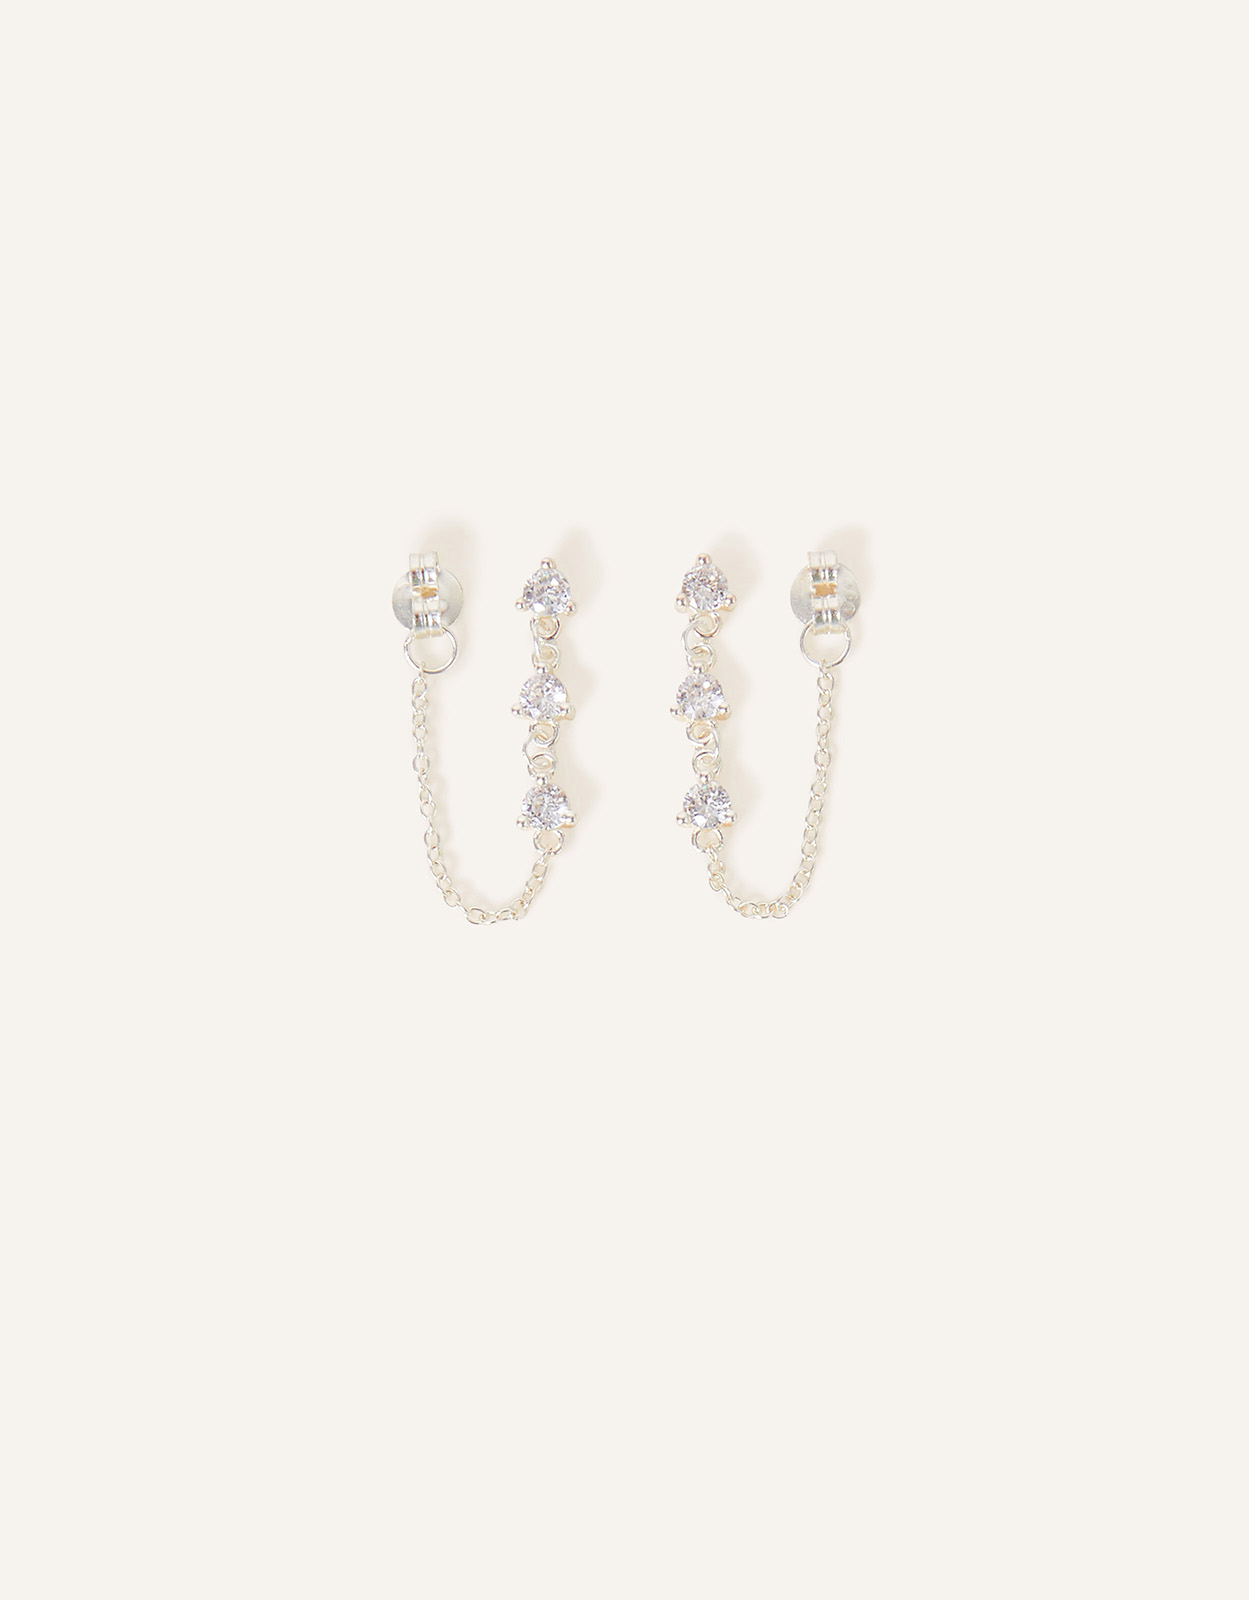 Accessorize Women's Sterling Silver Sparkle Chain Earrings, Size: 0.4cm